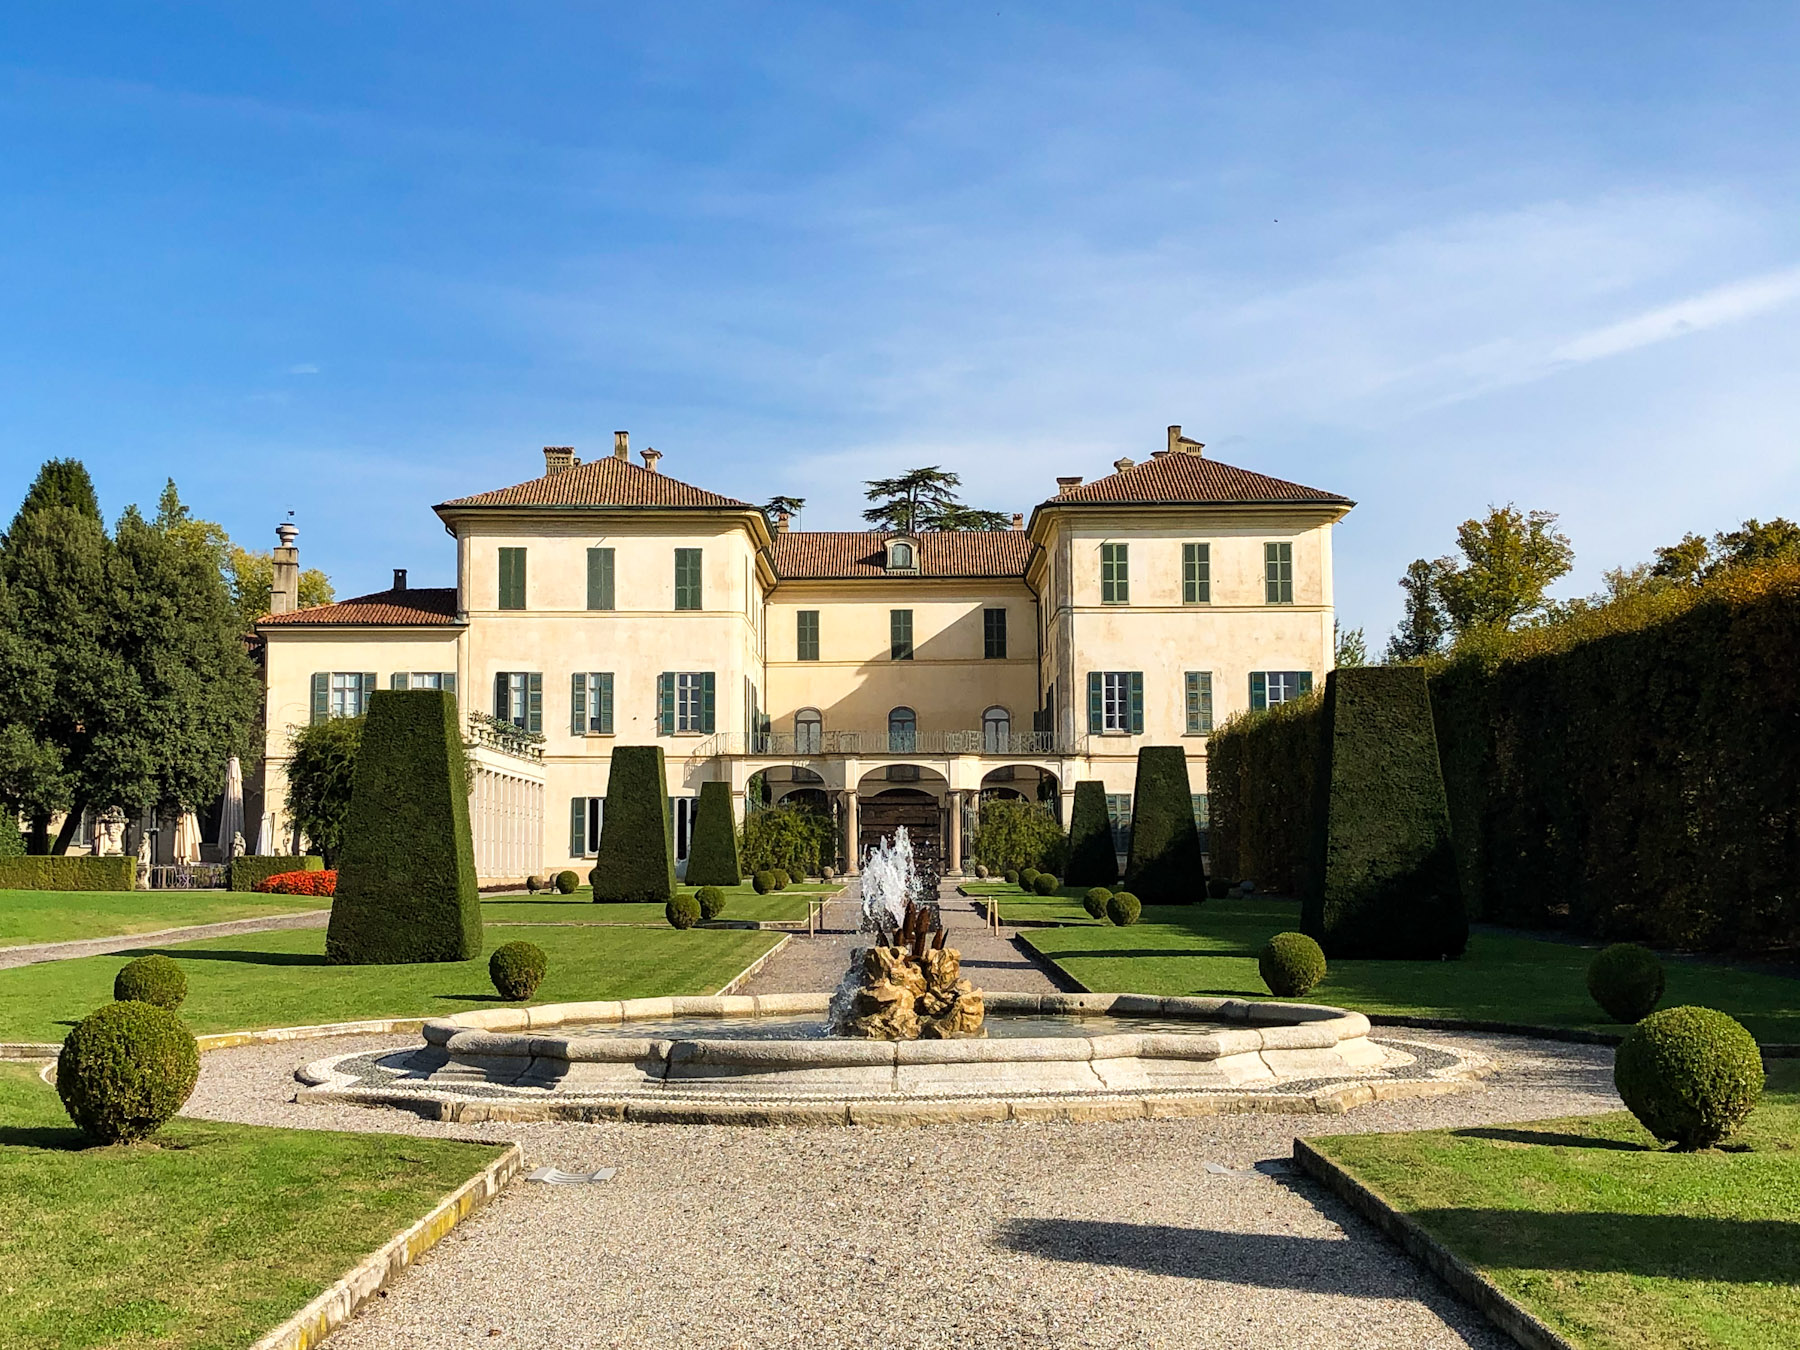 Neoclassical Villa Panza in Varese, Italy